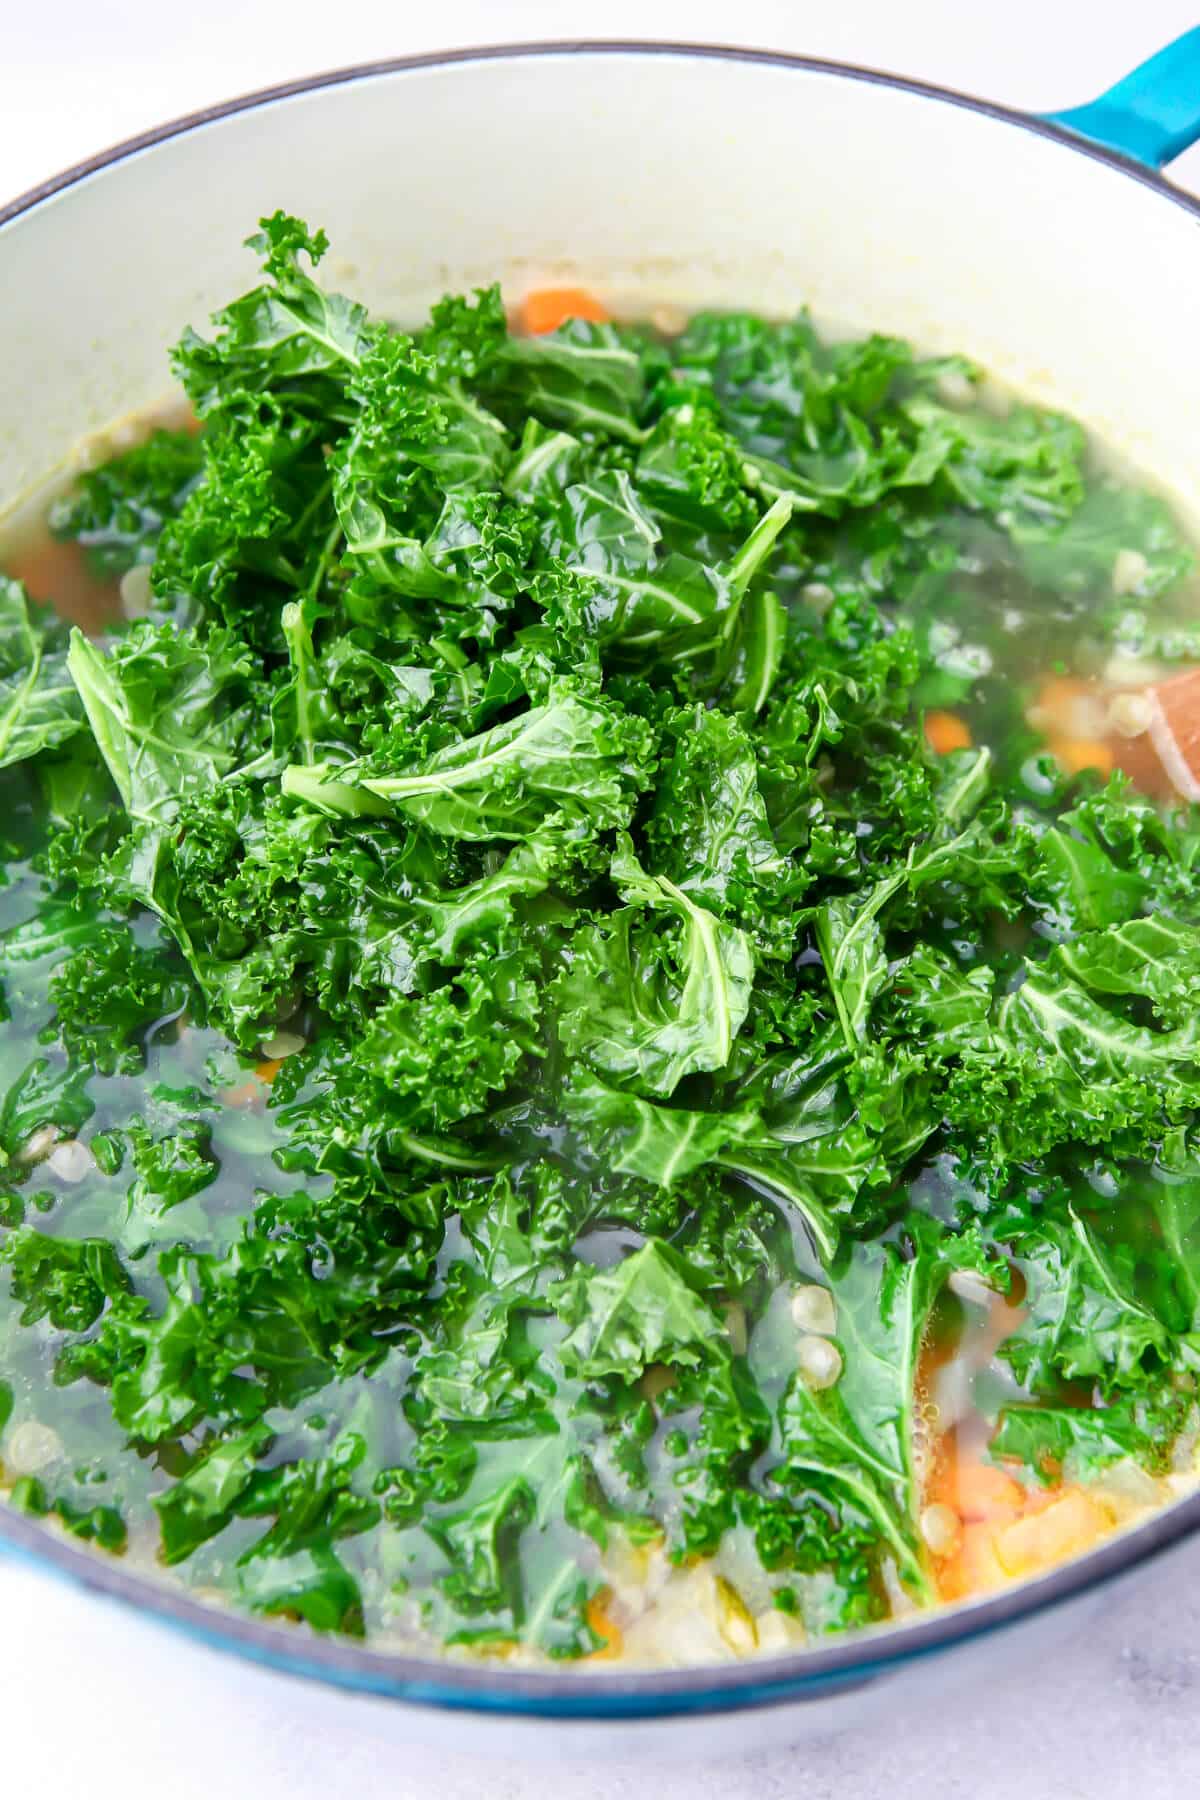 Massaged kale being added to a pot of lentil soup.